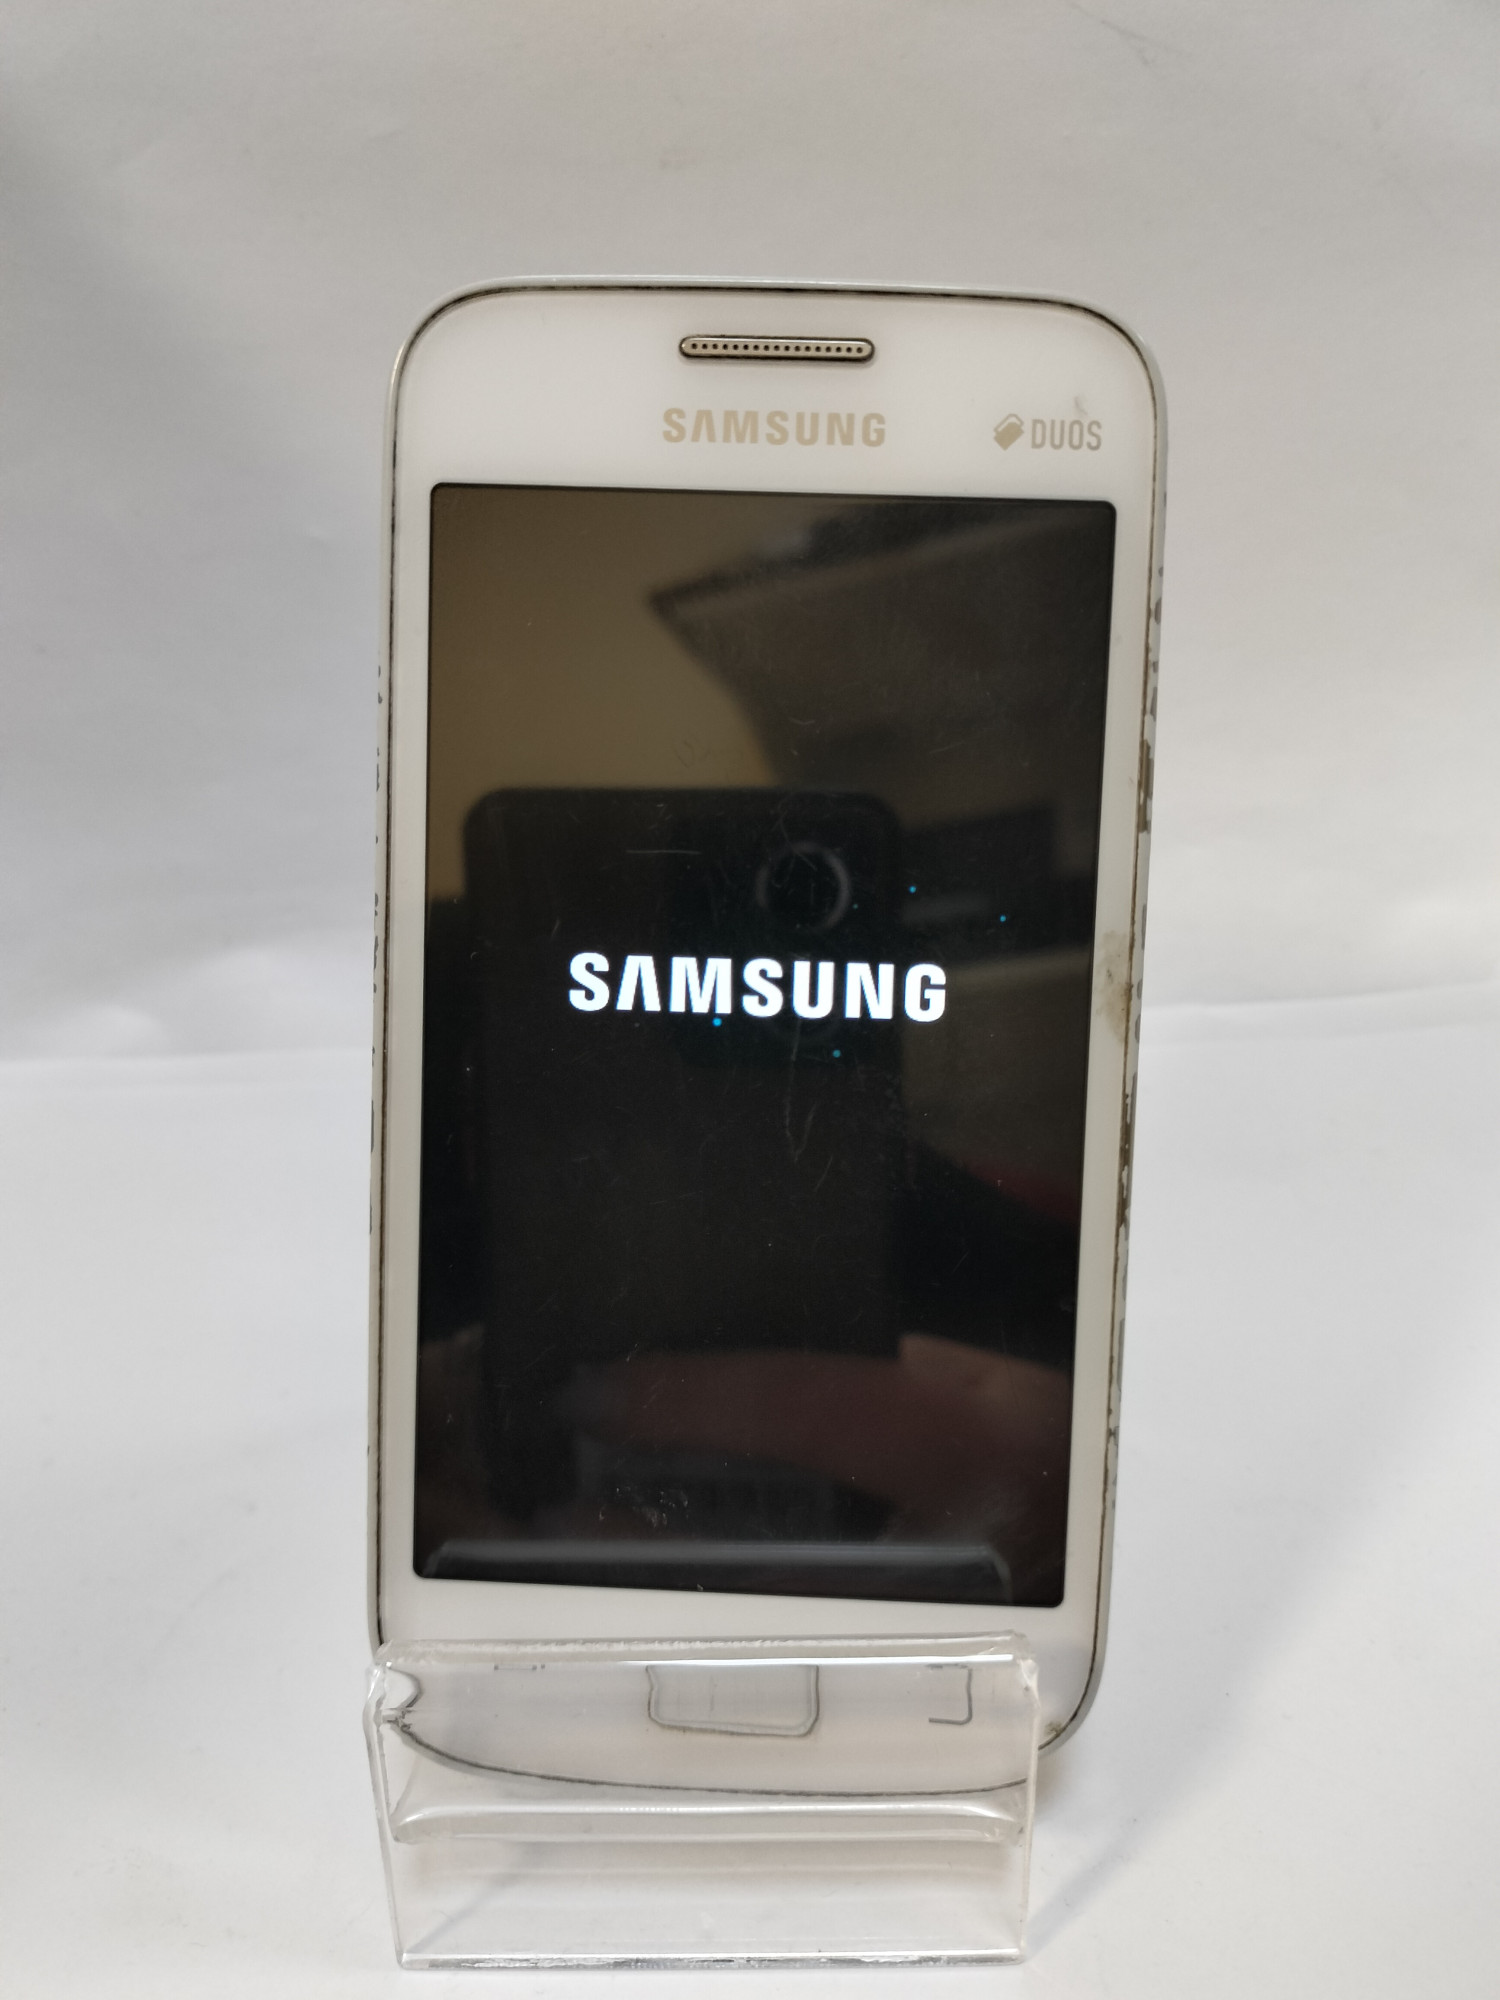 Samsung Galaxy Star Advance (SM-G350E) 4Gb 1